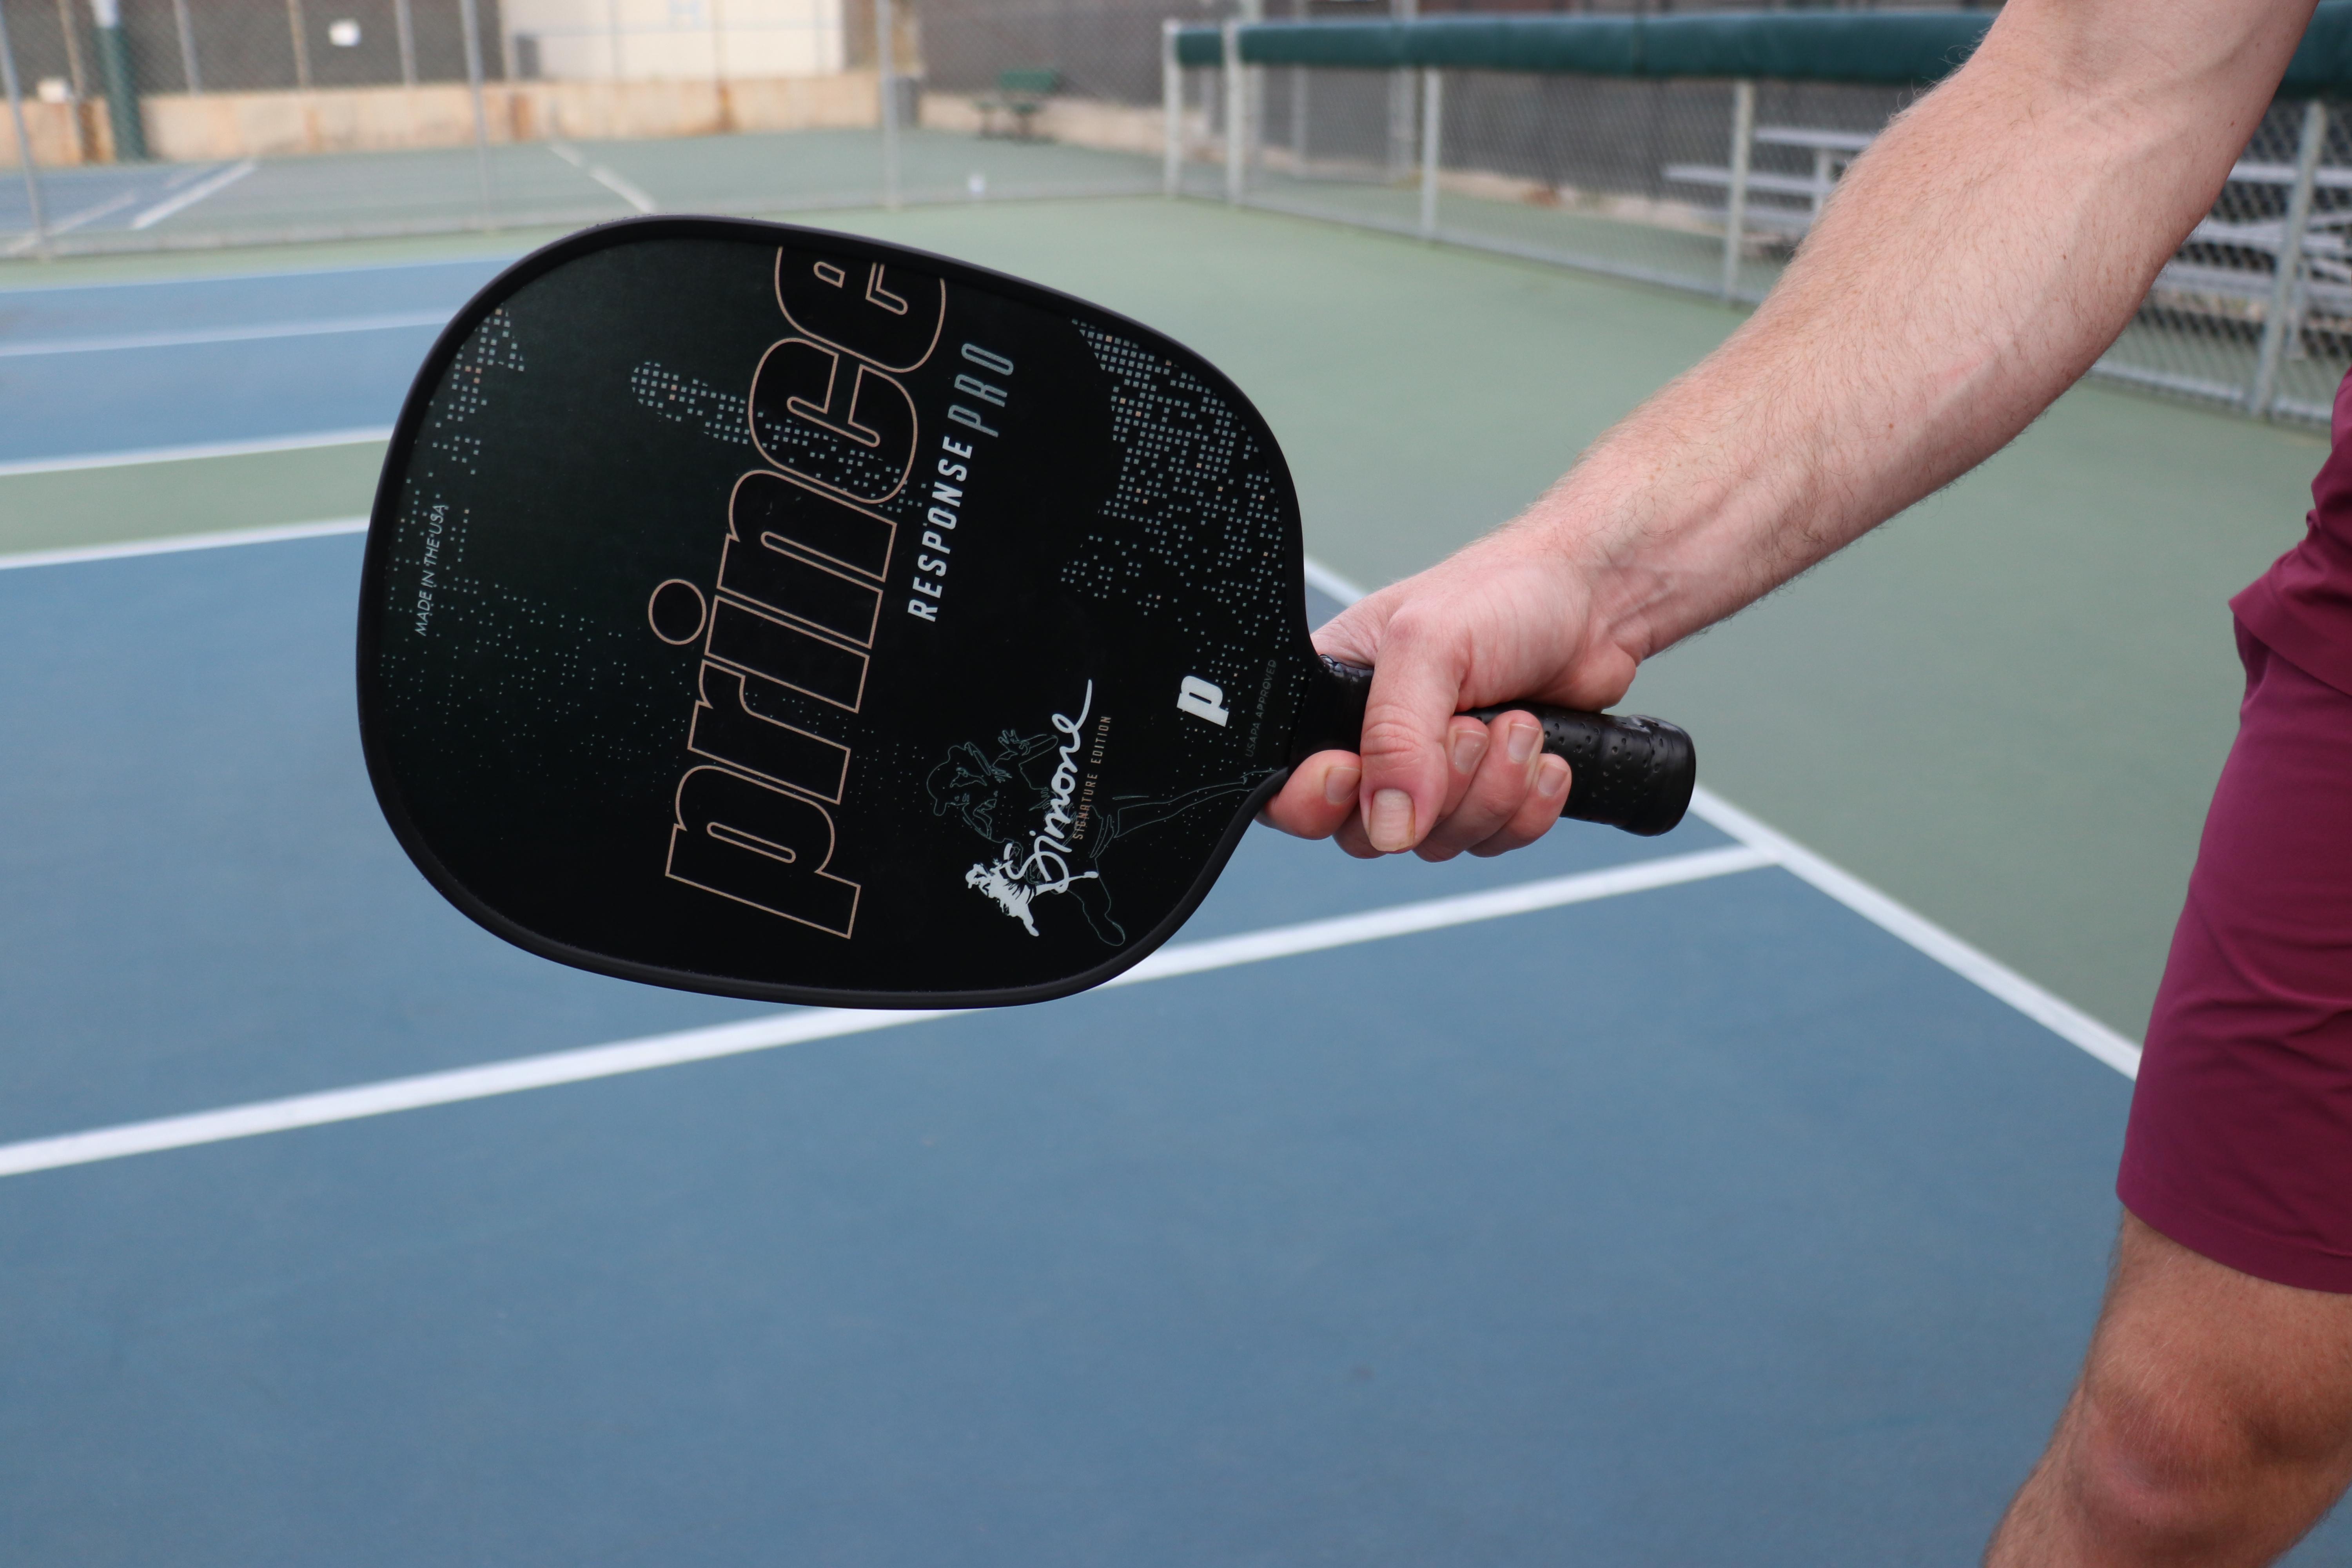 ScoreBand PLAY - Tennis/Pickleball/Platform/Racquetball